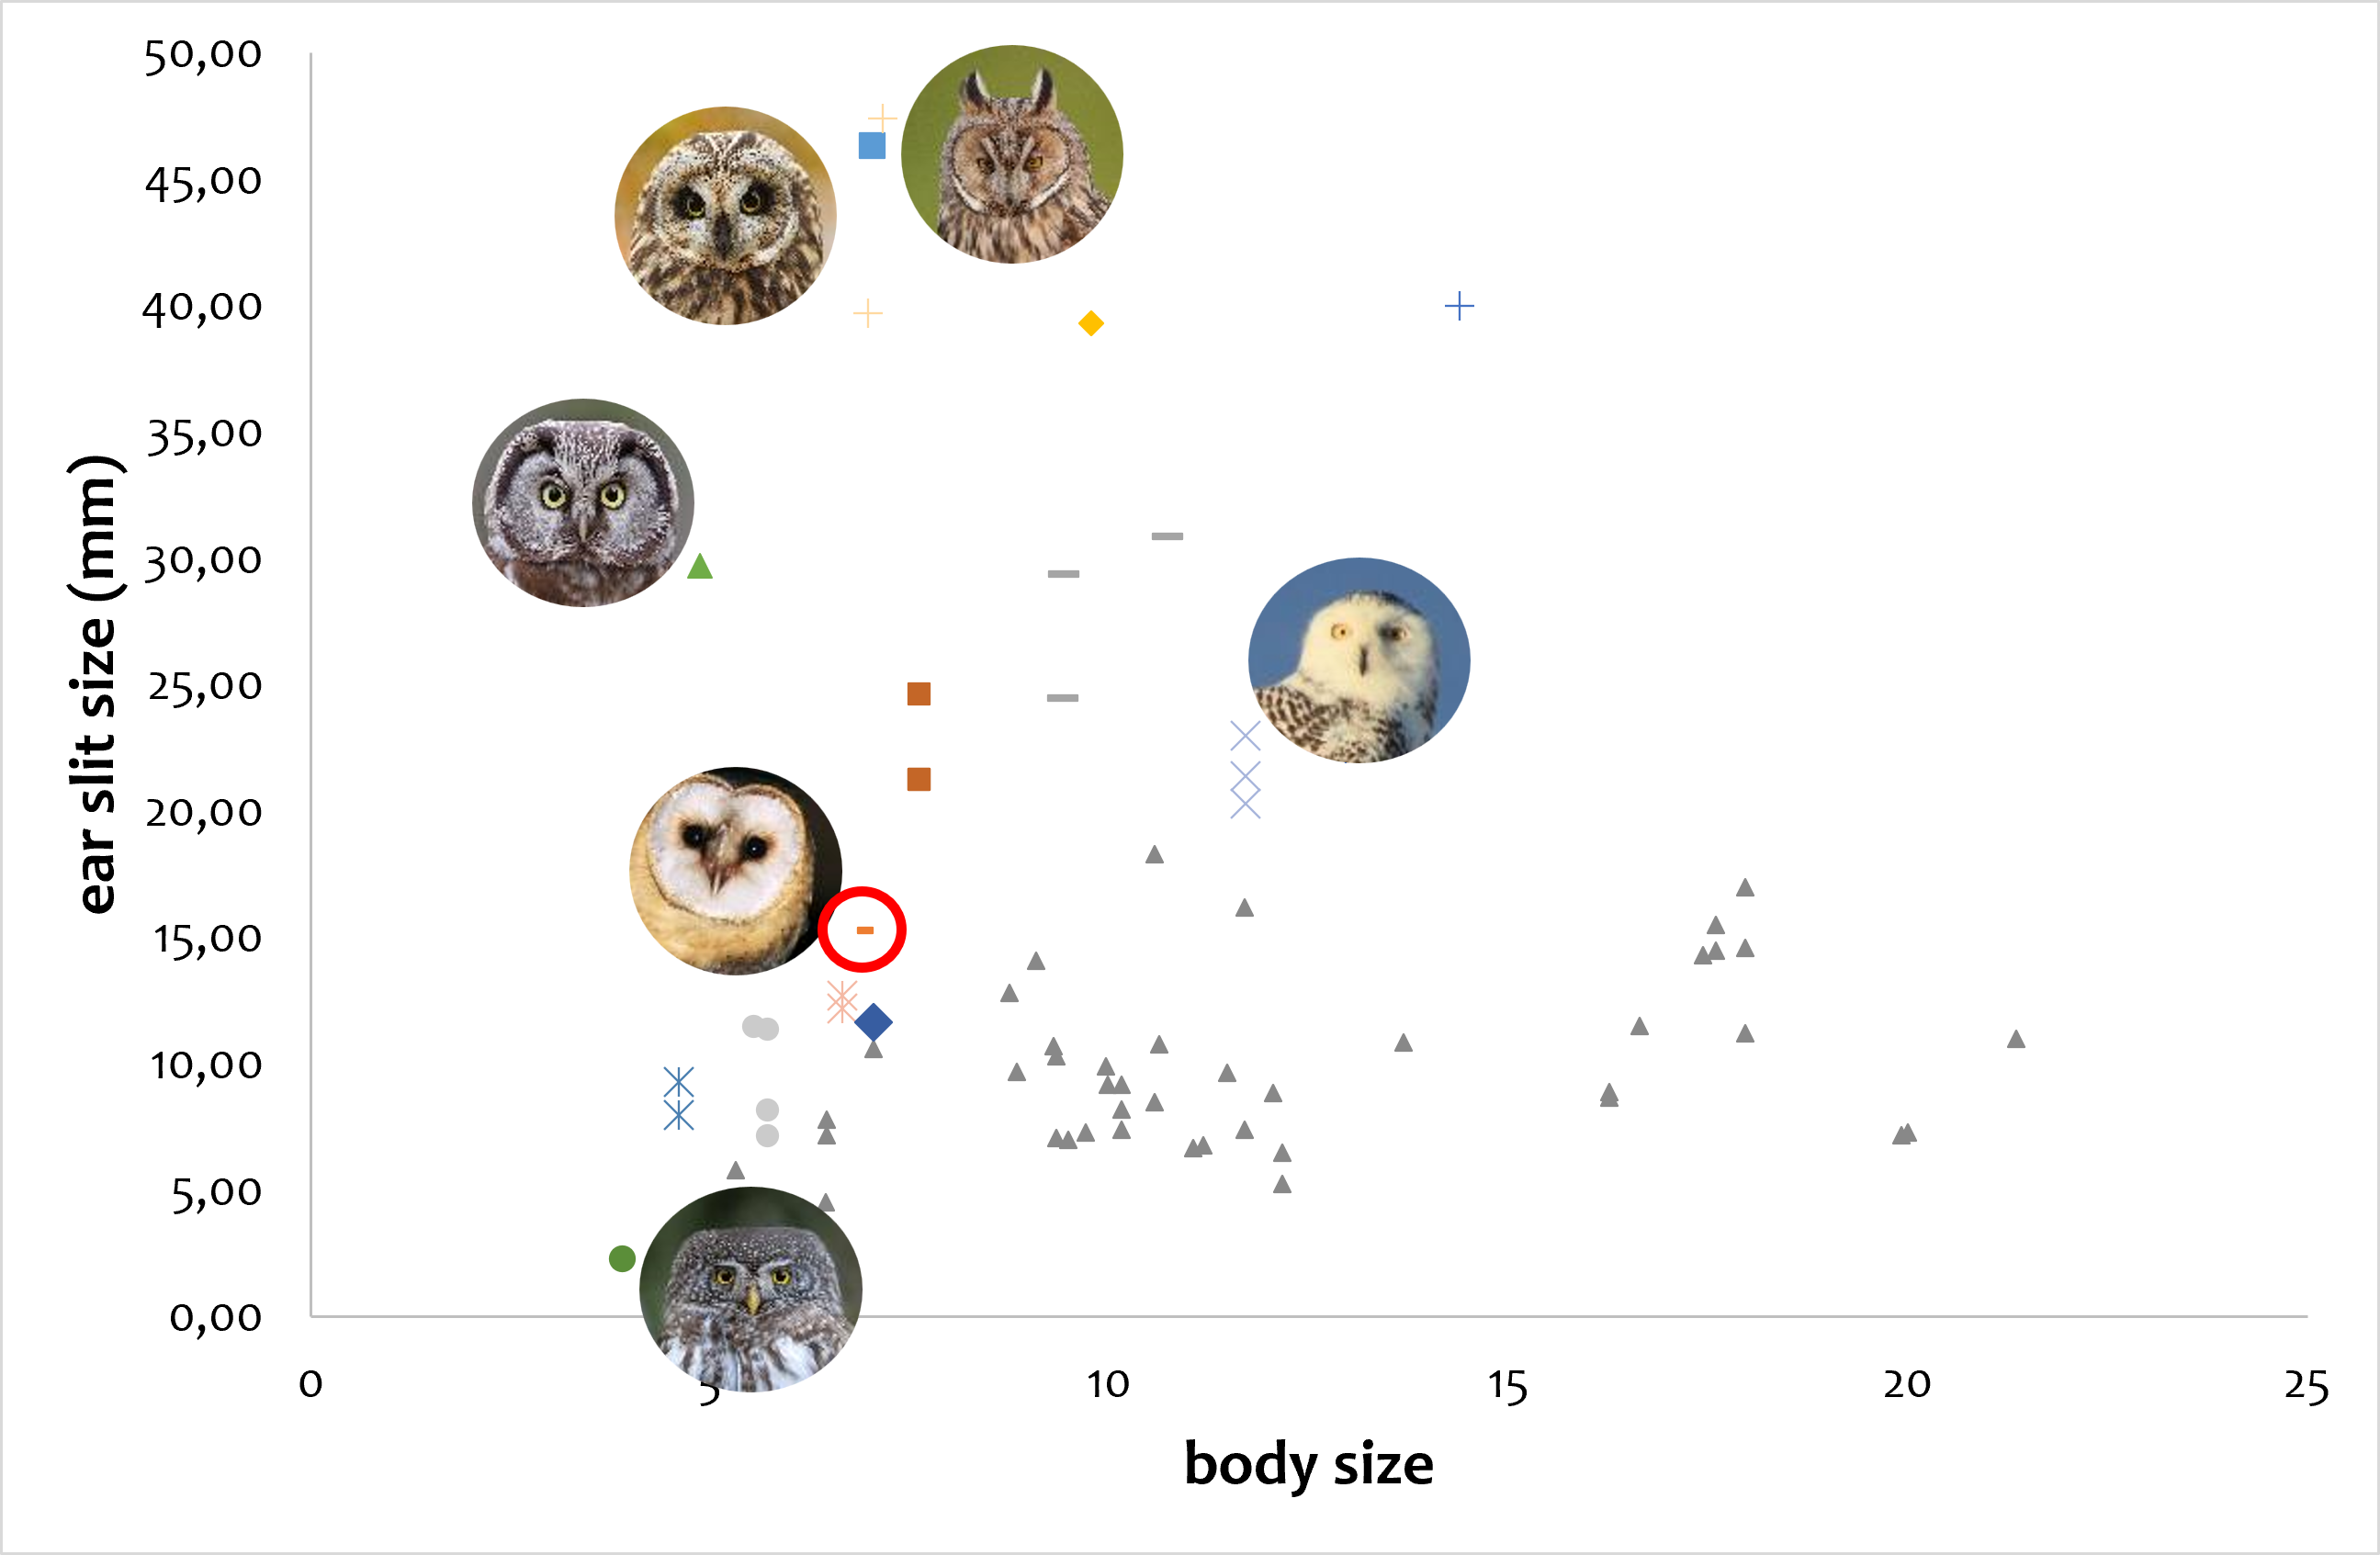 ear slit size variation among European owls